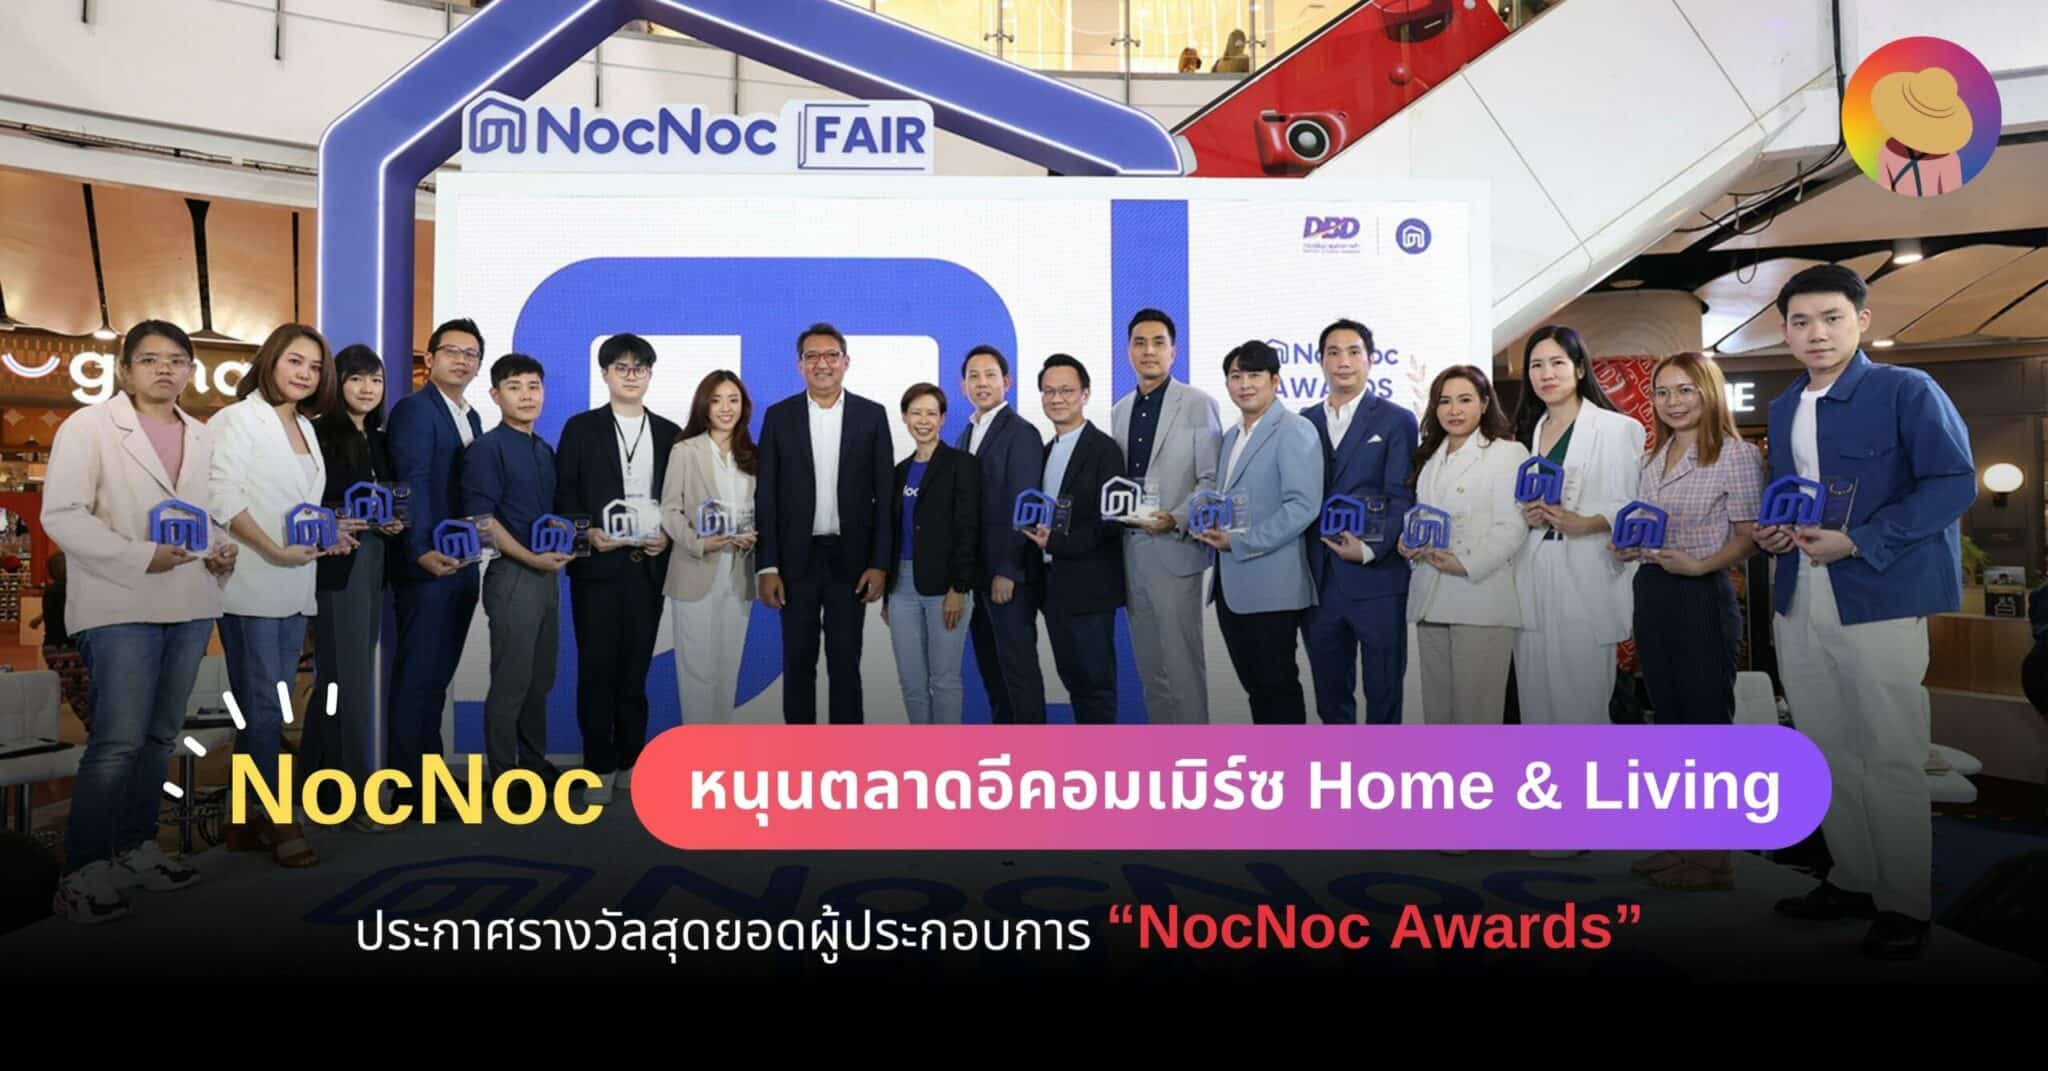 NocNoc หนุนตลาดอีคอมเมิร์ซ Home & Living  ประกาศรางวัลสุดยอดผู้ประกอบการ “NocNoc Awards”